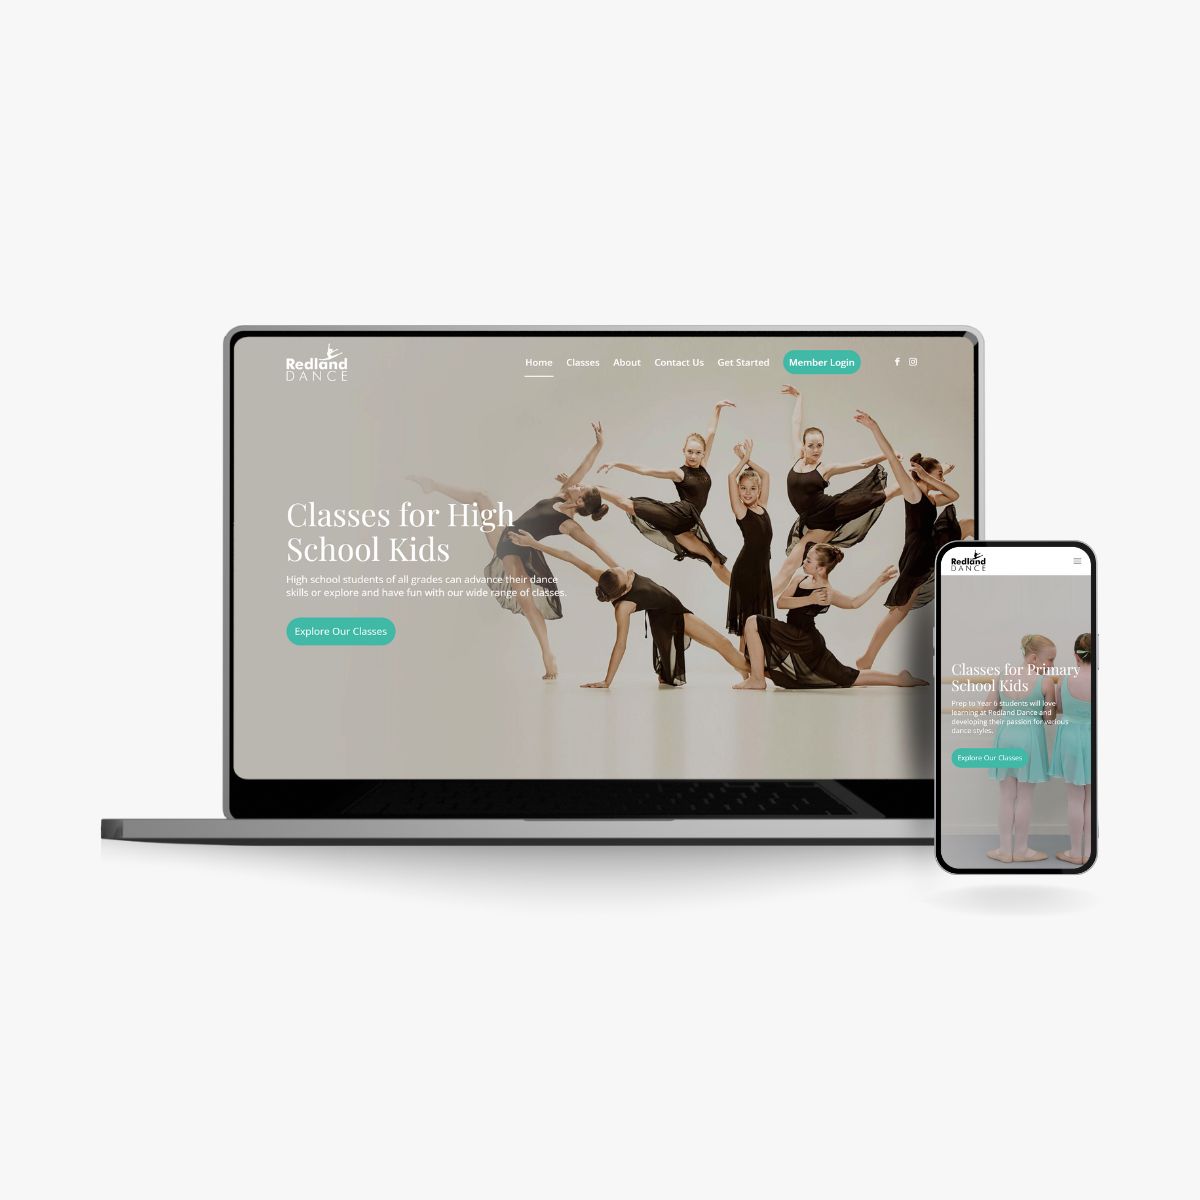 Redland Dance, a dance studio website using the Enfold theme for WordPress - Designed by Done Digital, Brisbane